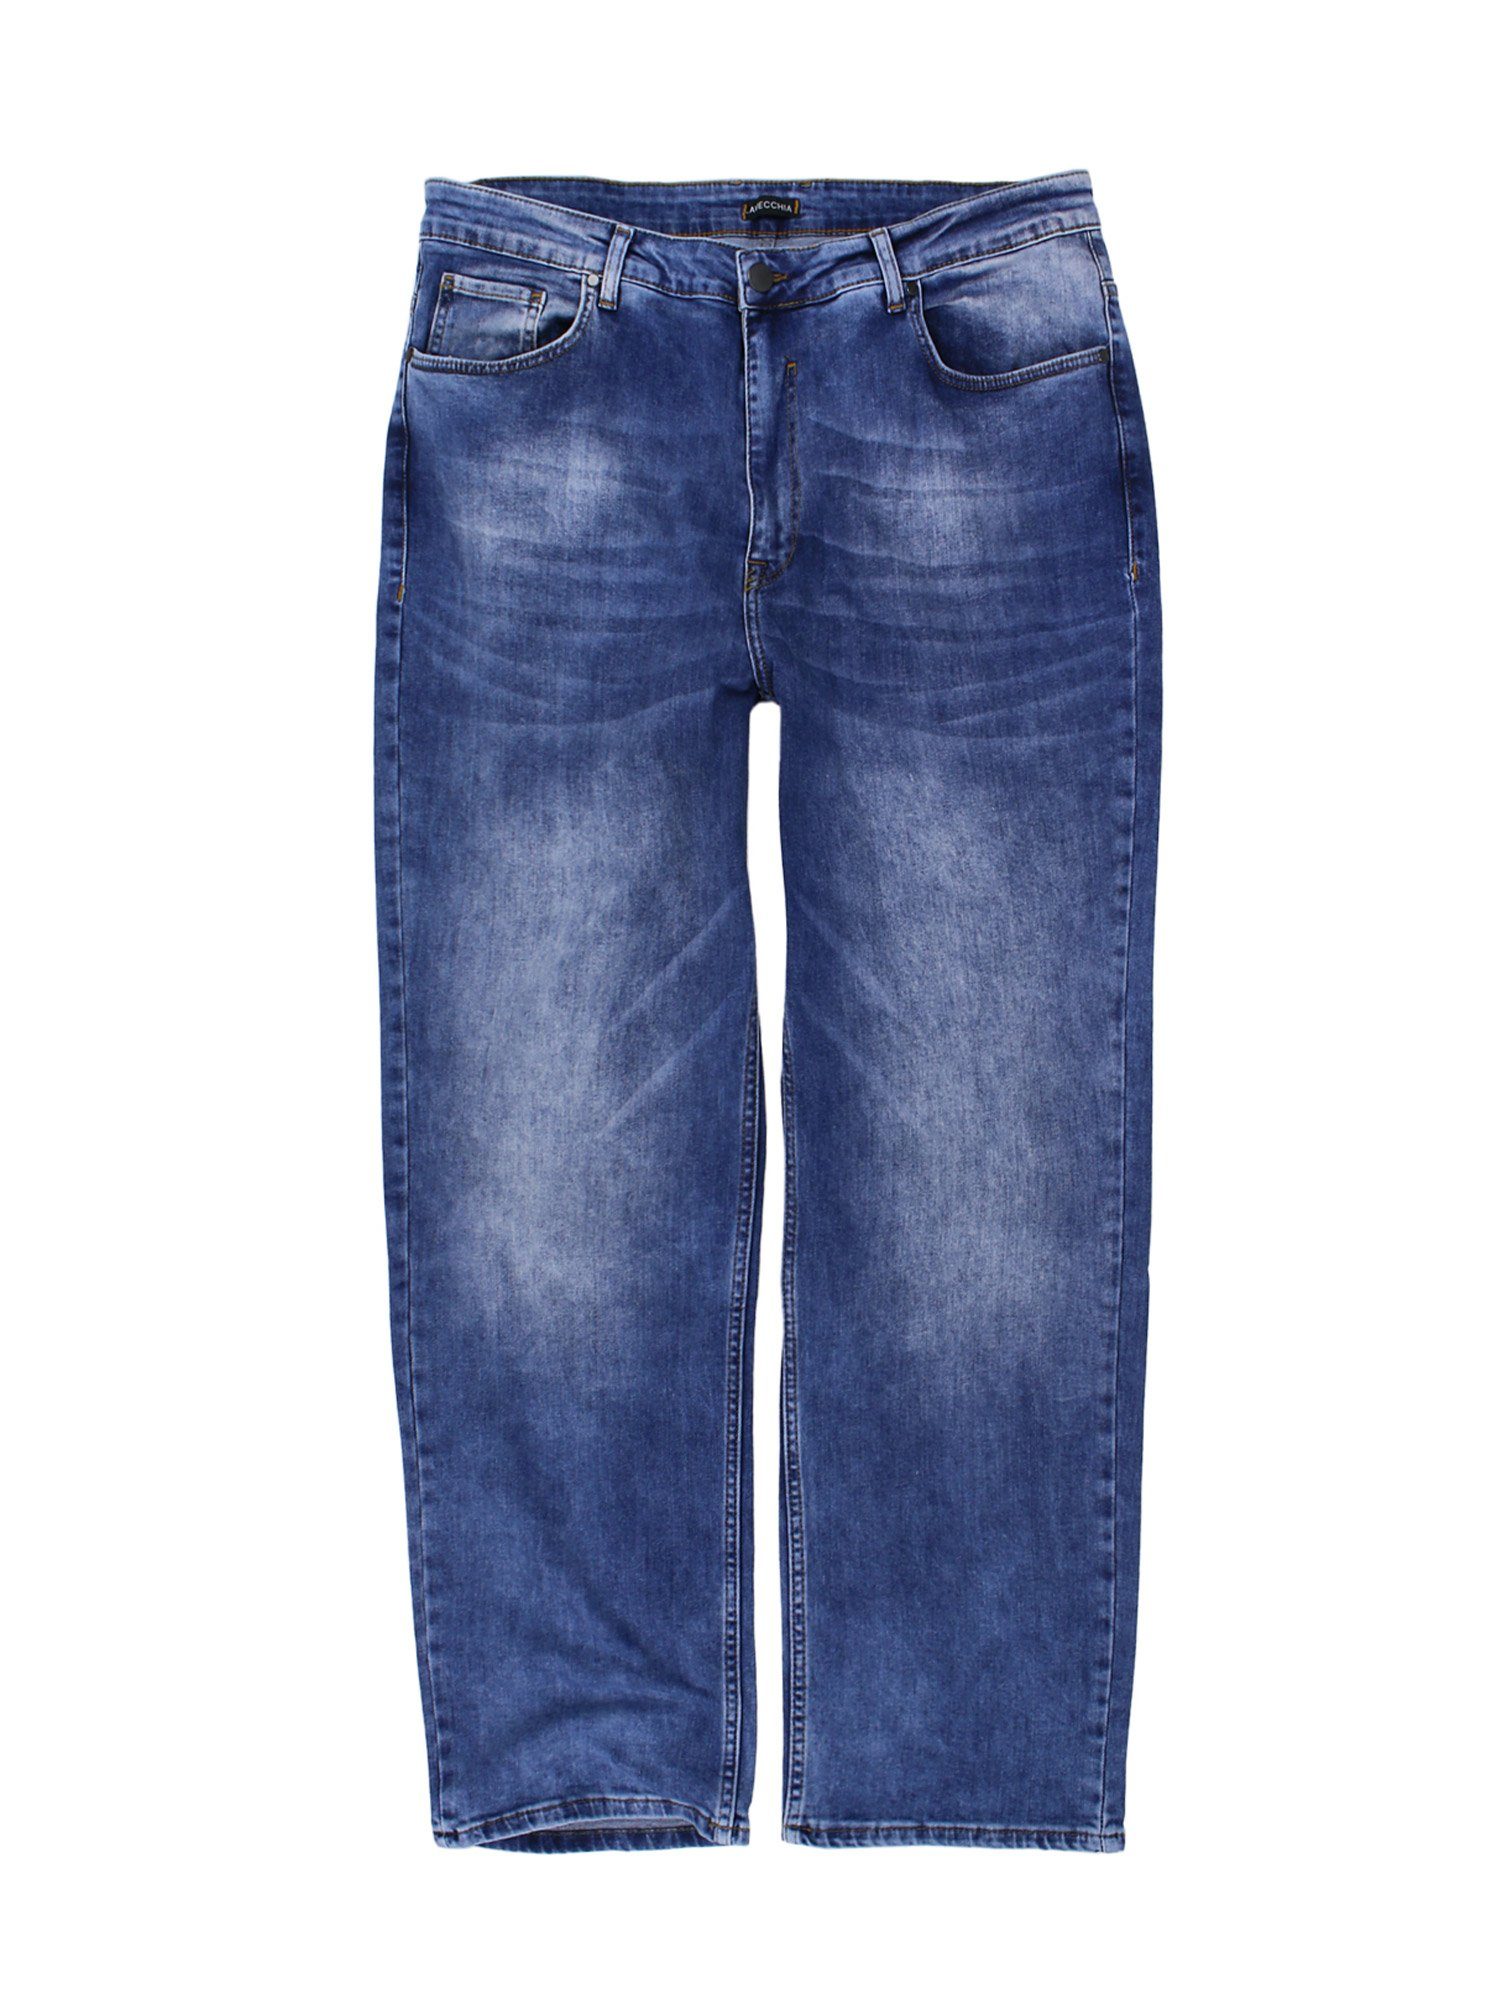 Lavecchia Comfort-fit-Jeans Übergrößen Jeanshose stoneblau Elasthan Herren Stretch mit LV-501